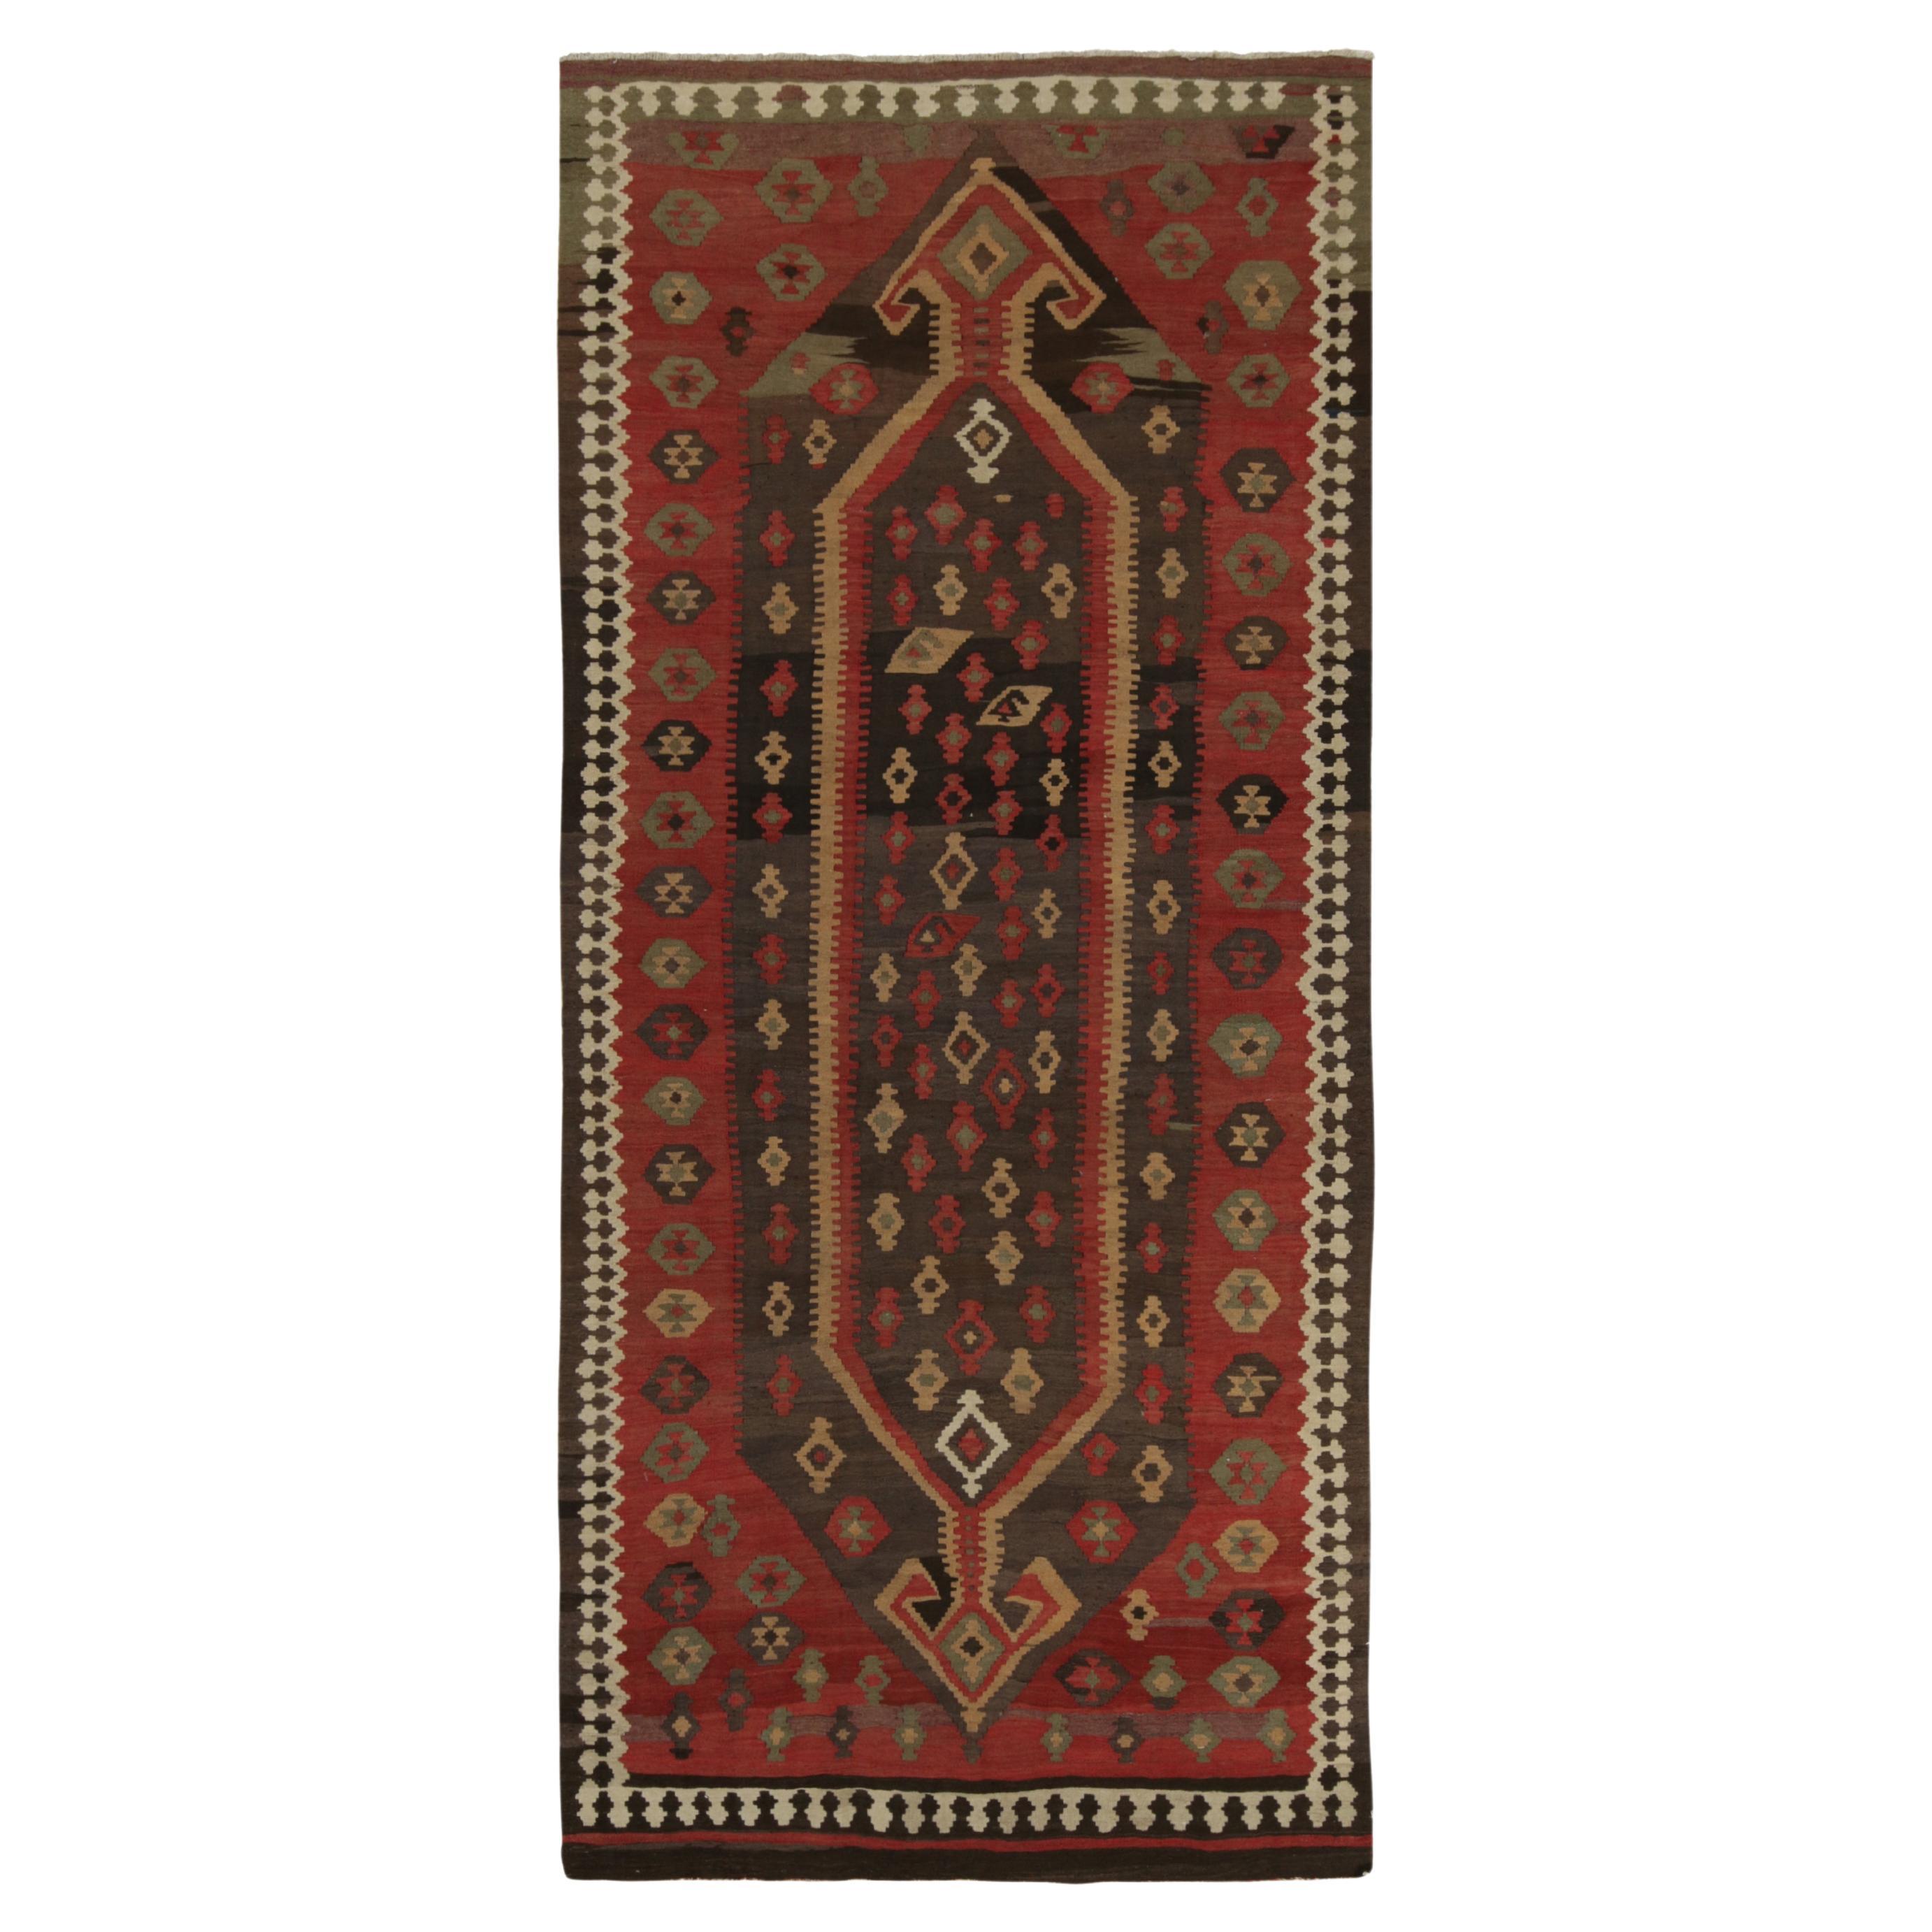 Vintage Shahsavan Persian Kilim in Red and Brown Patterns by Rug & Kilim For Sale